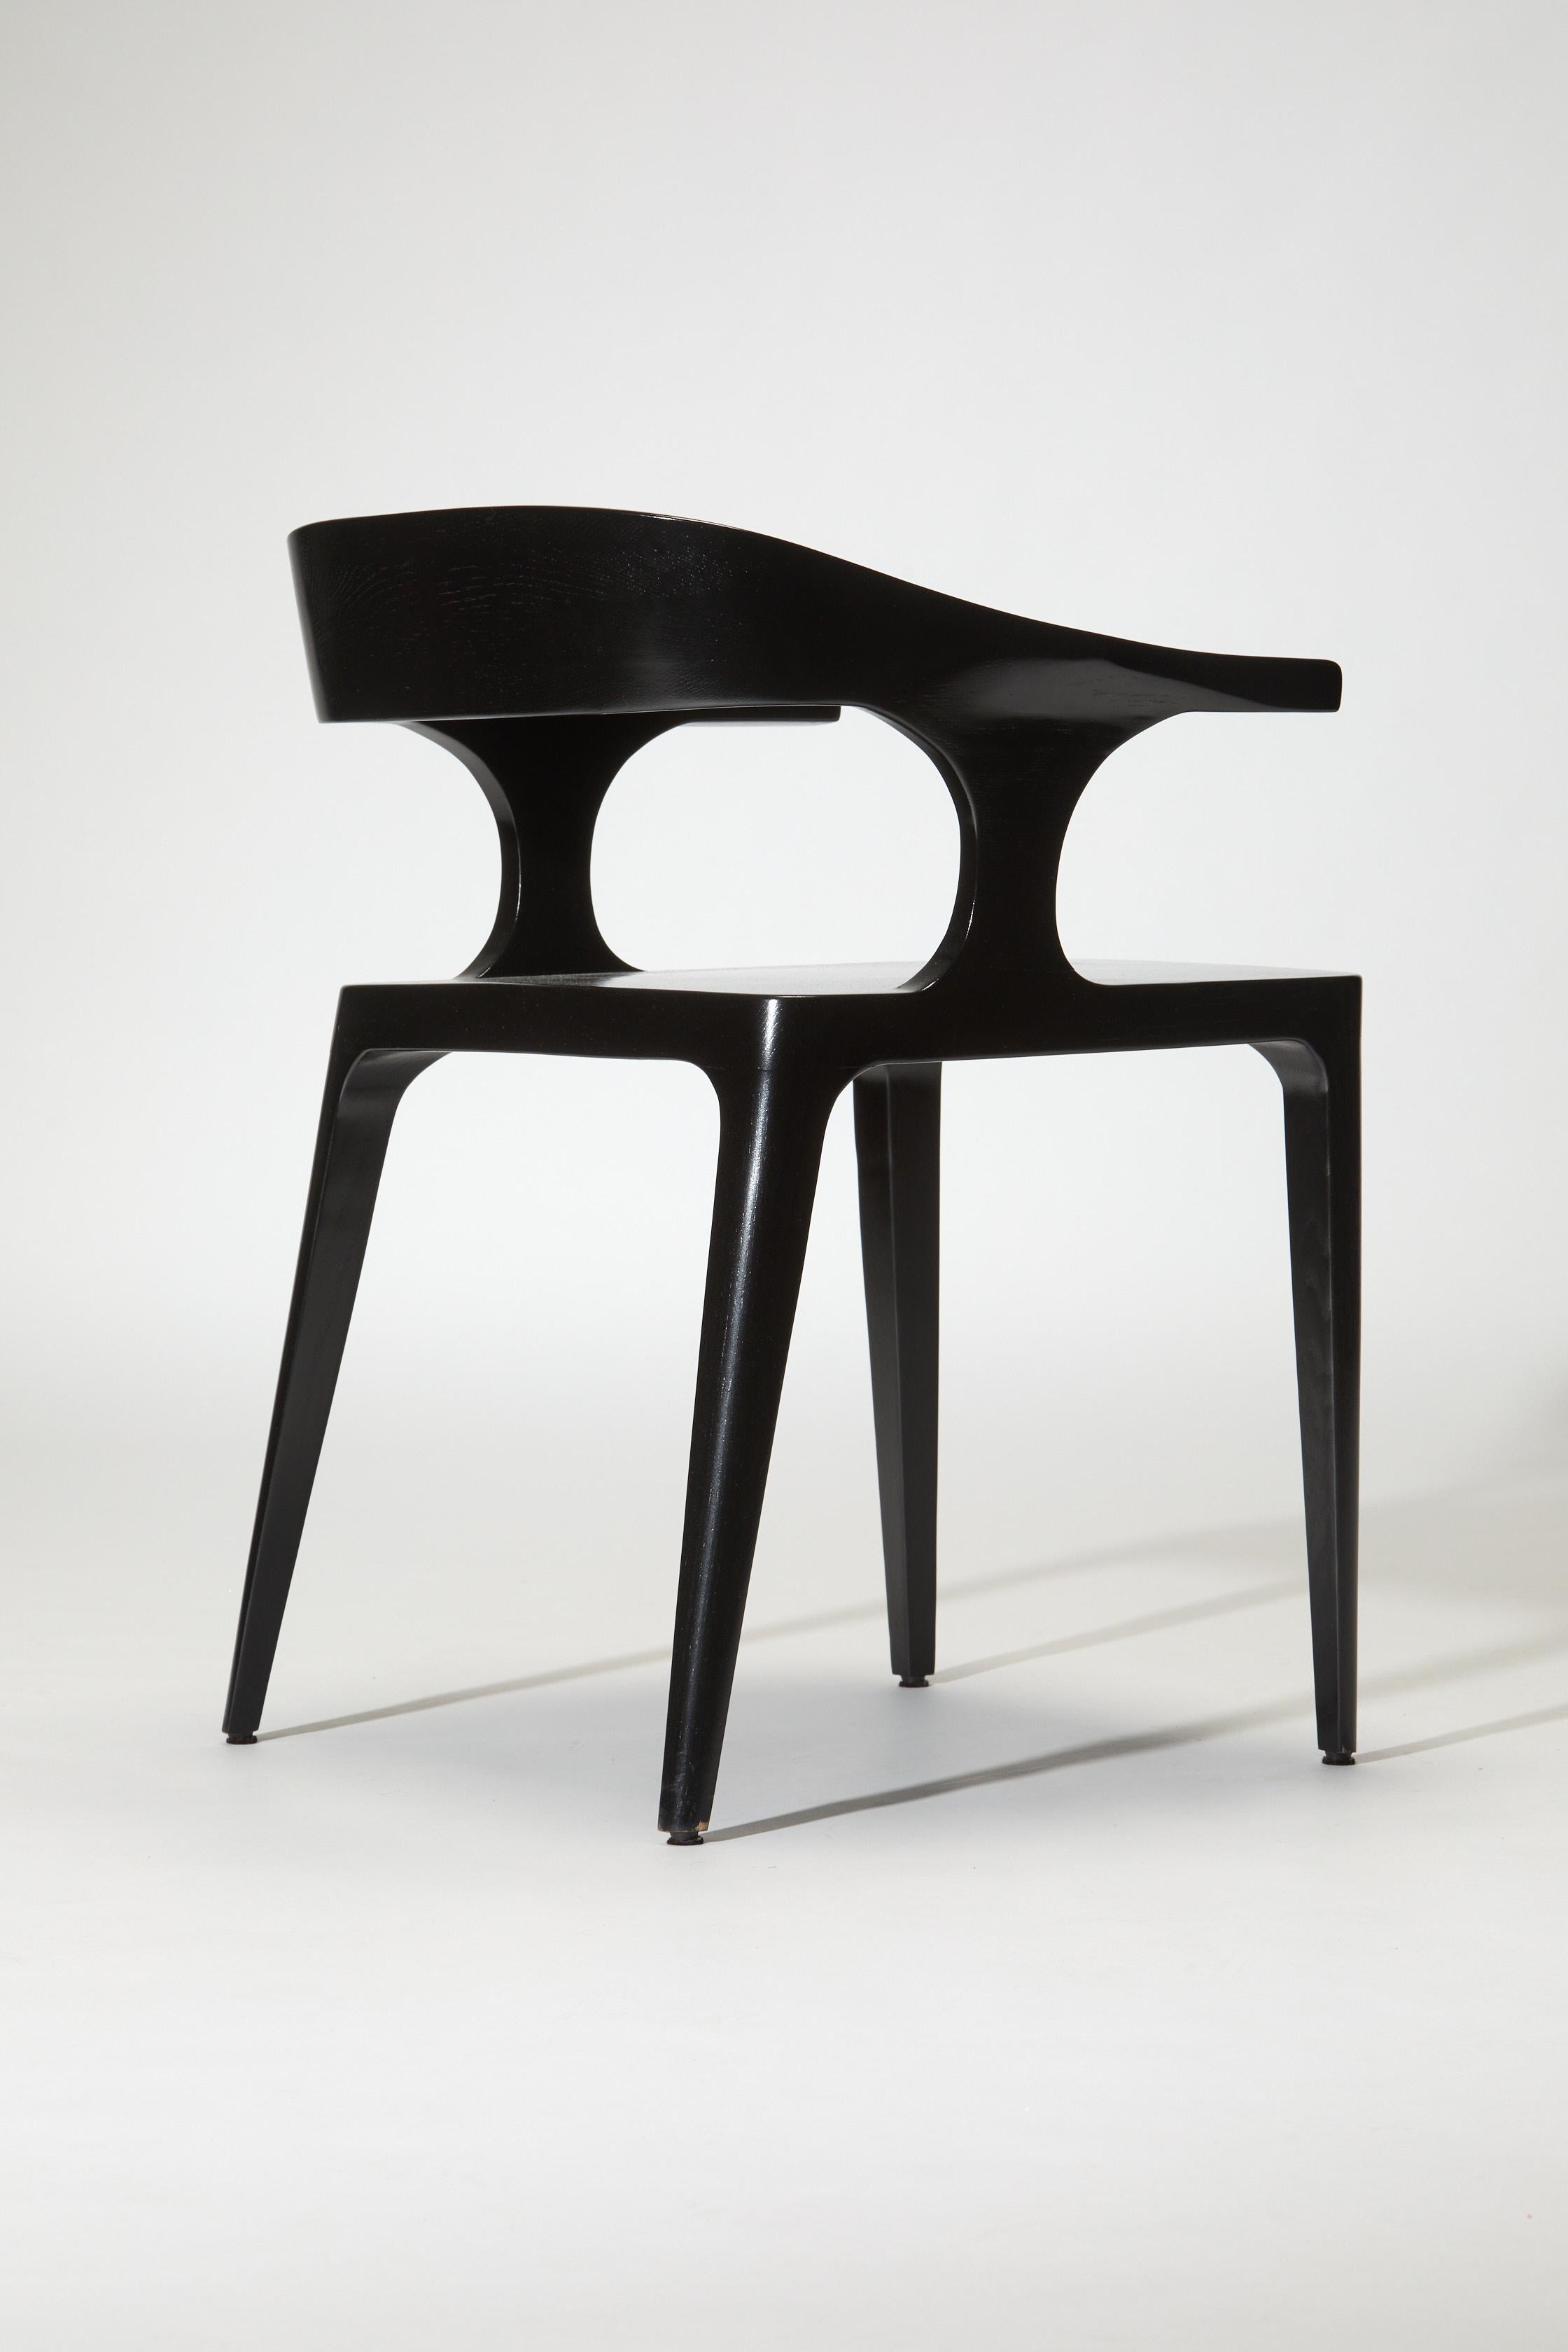 Organic Modern Chair, EILEEN, by Reda Amalou Design, 2020, Blackened Ash